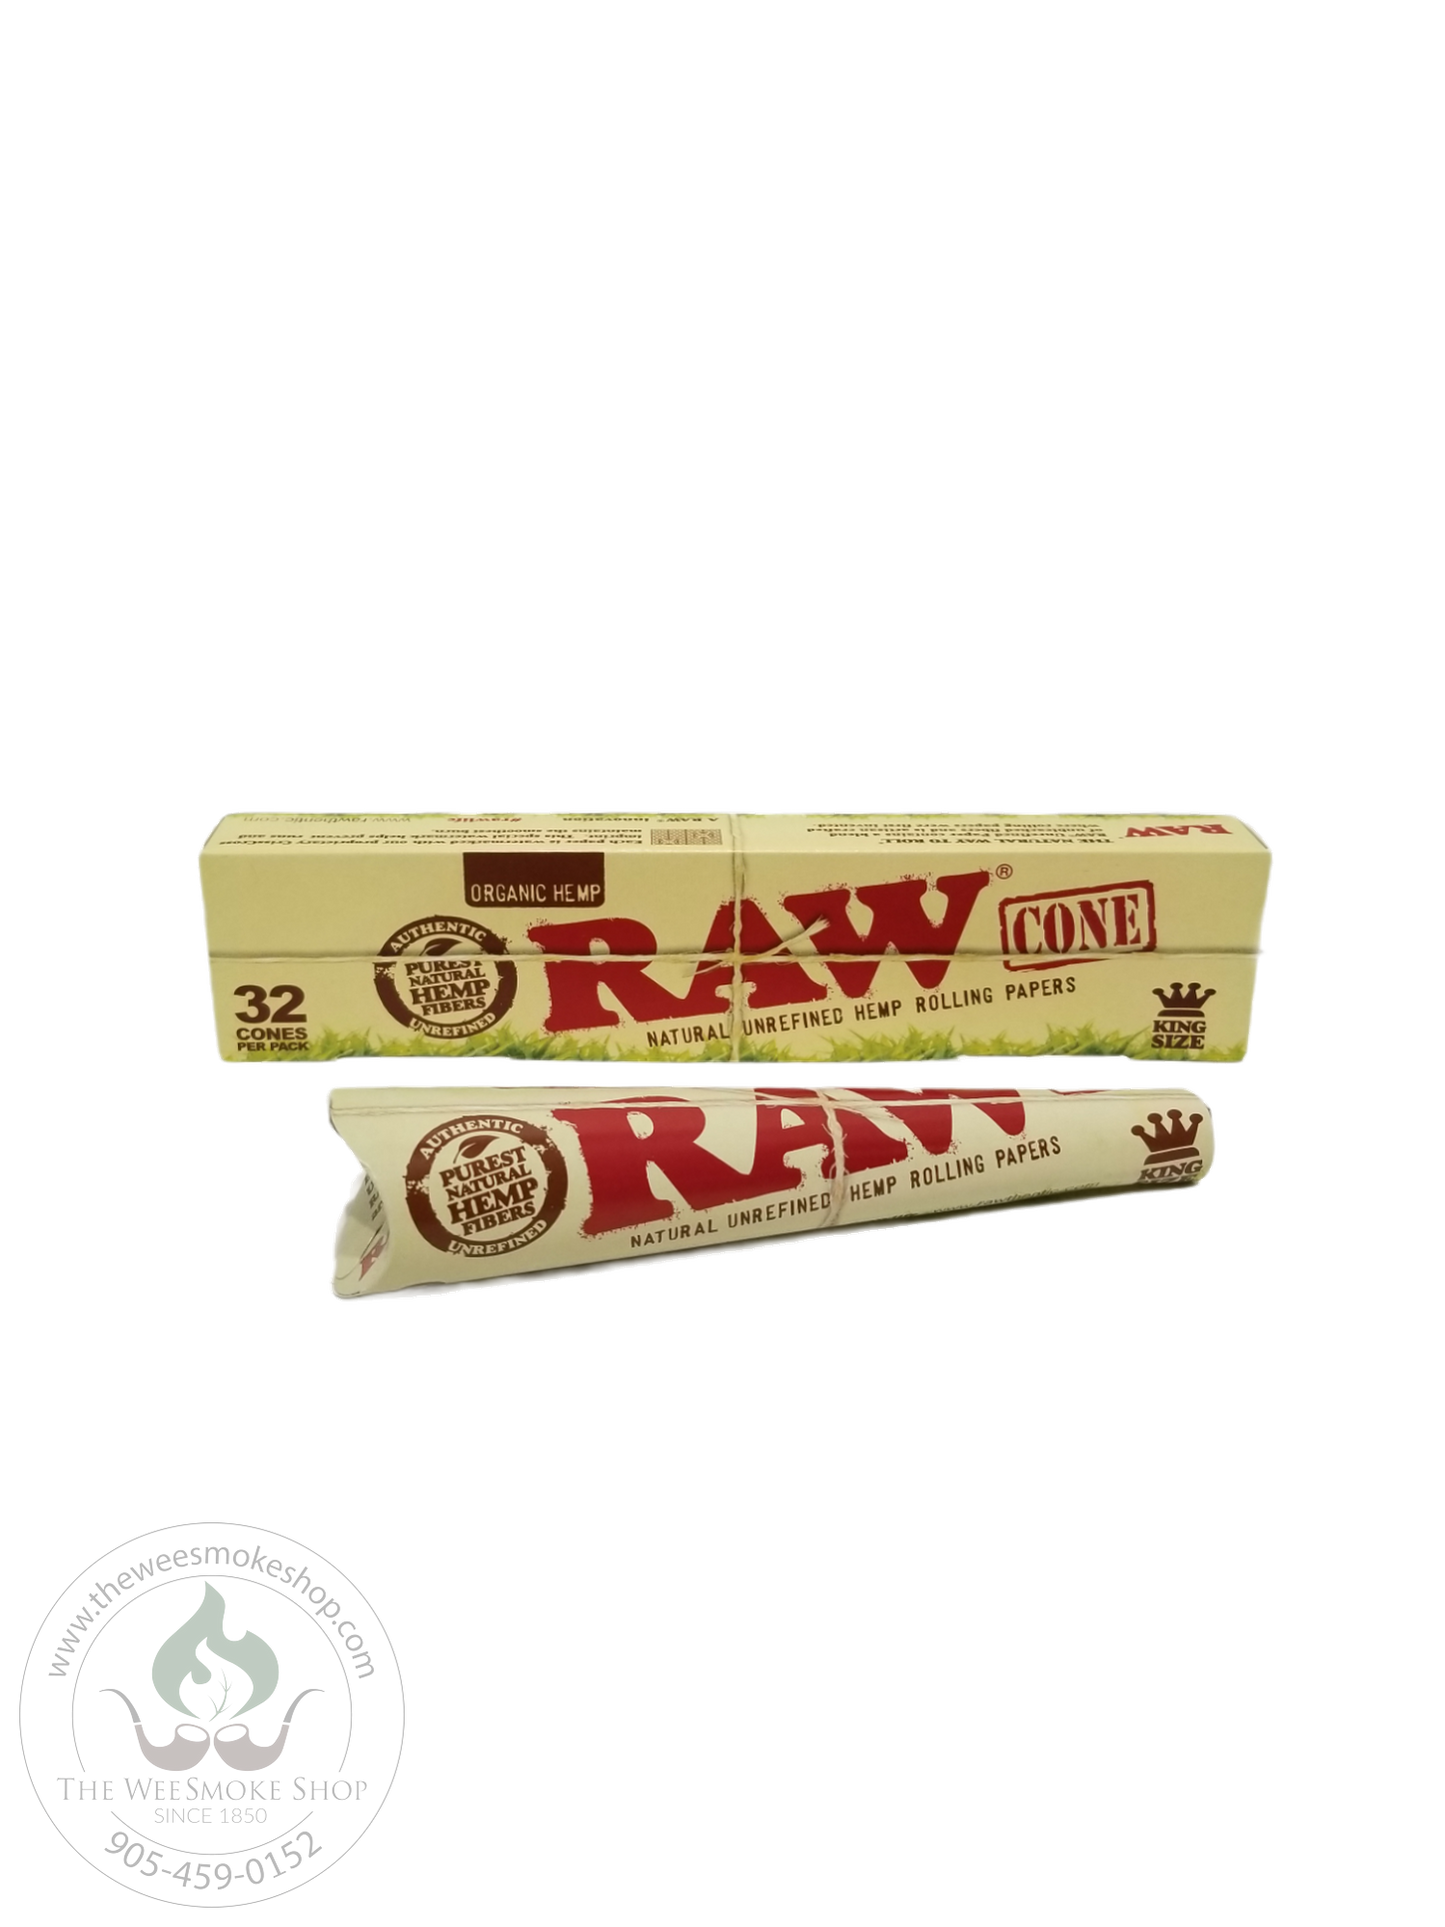 RAW Organic Hemp Cones (3 or 32 pack)-cones-The Wee Smoke Shop